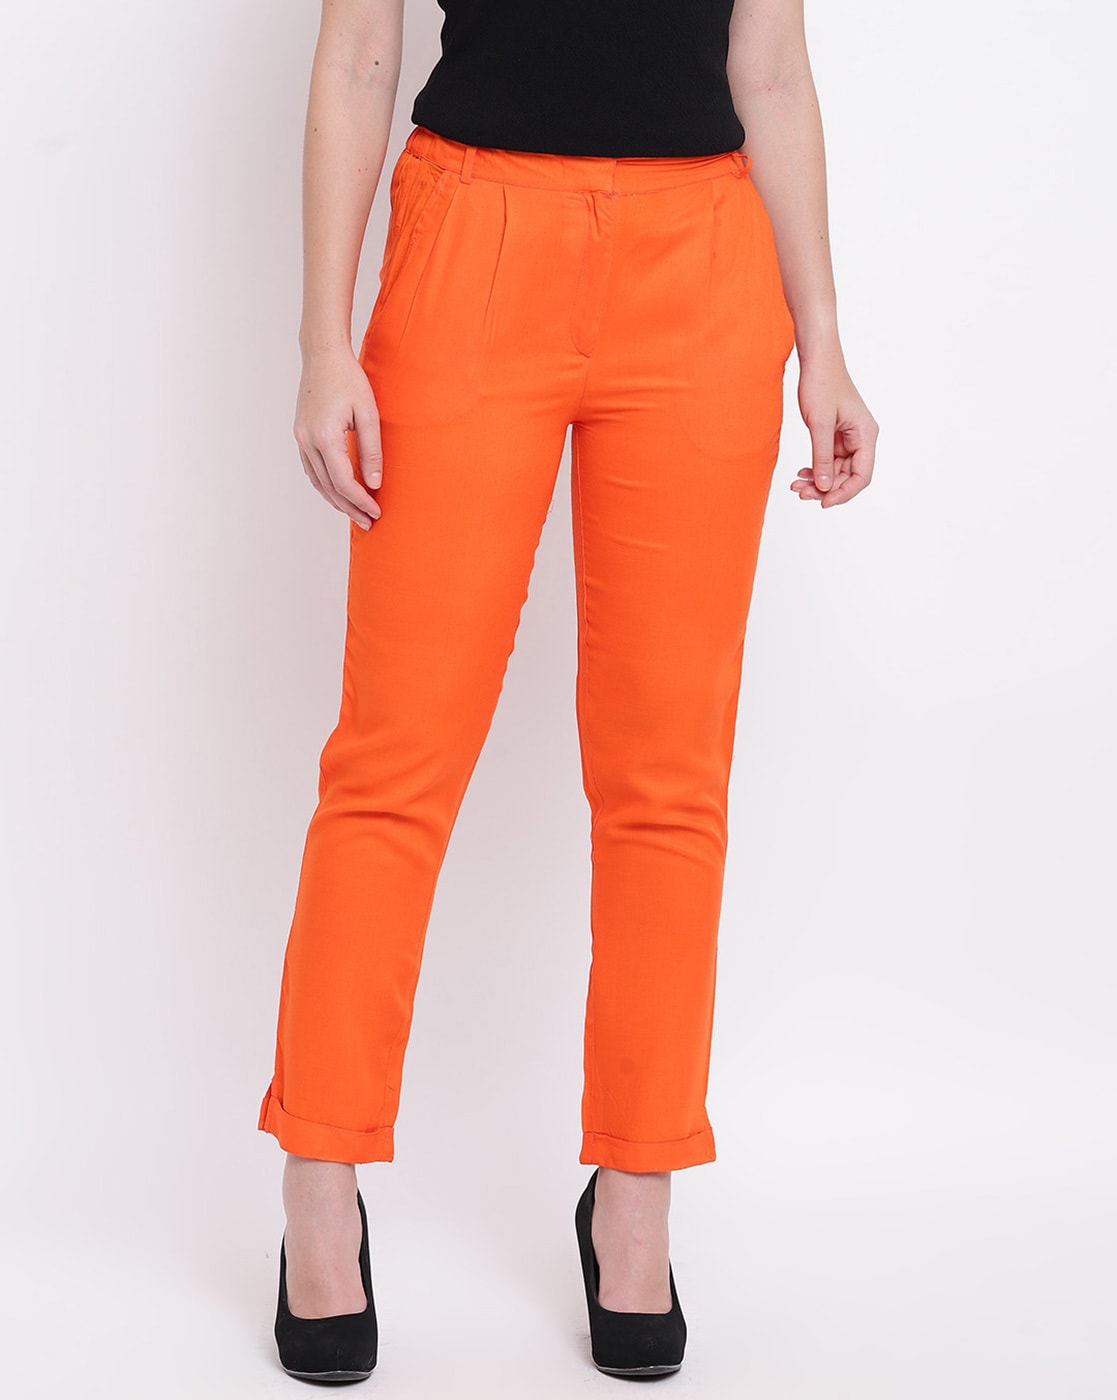 Tall Women's Orange Wide Leg Pants |Tall Clothing | Prissy Duck